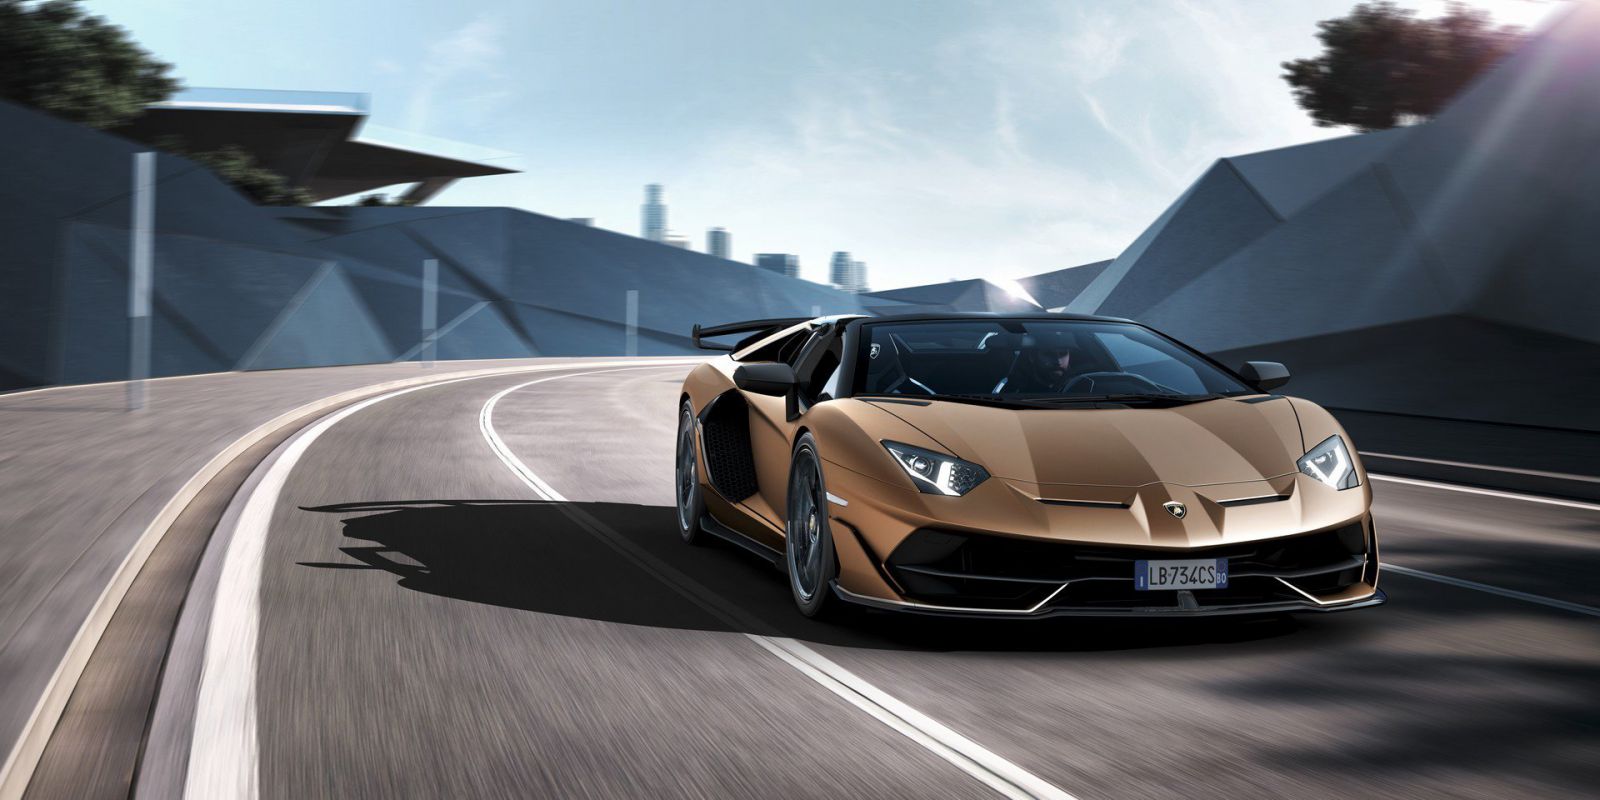 Ảnh đẹp xe Lamborghini cực chất